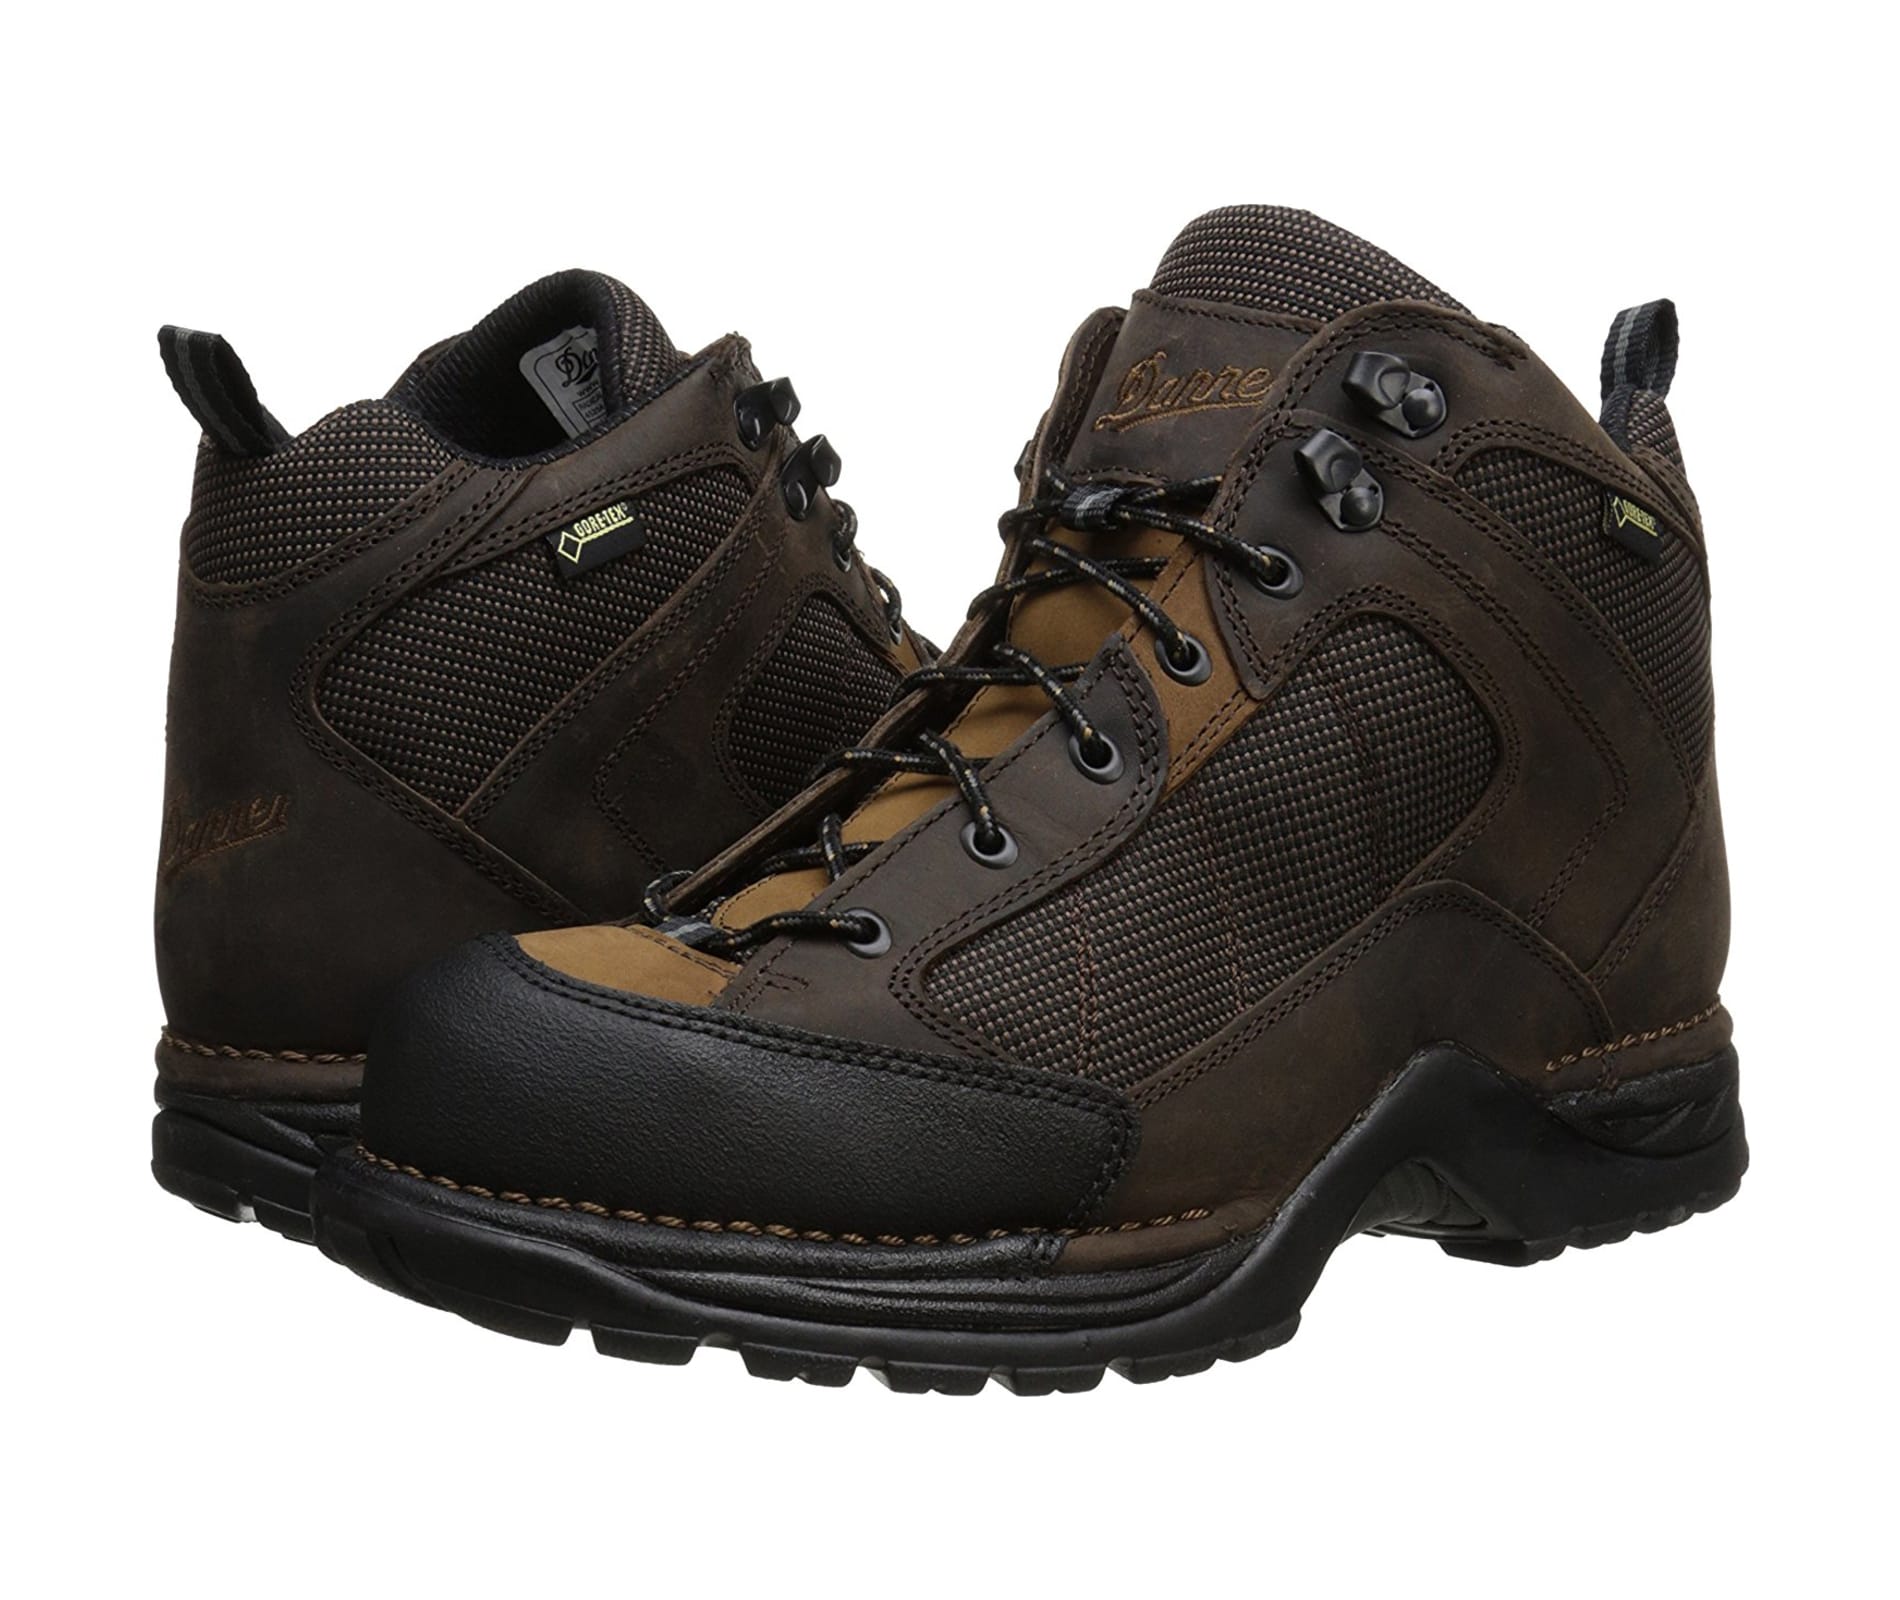 Danner Radical 452 Men's GTX Outdoor Hiking Boot Dark Brown - 11